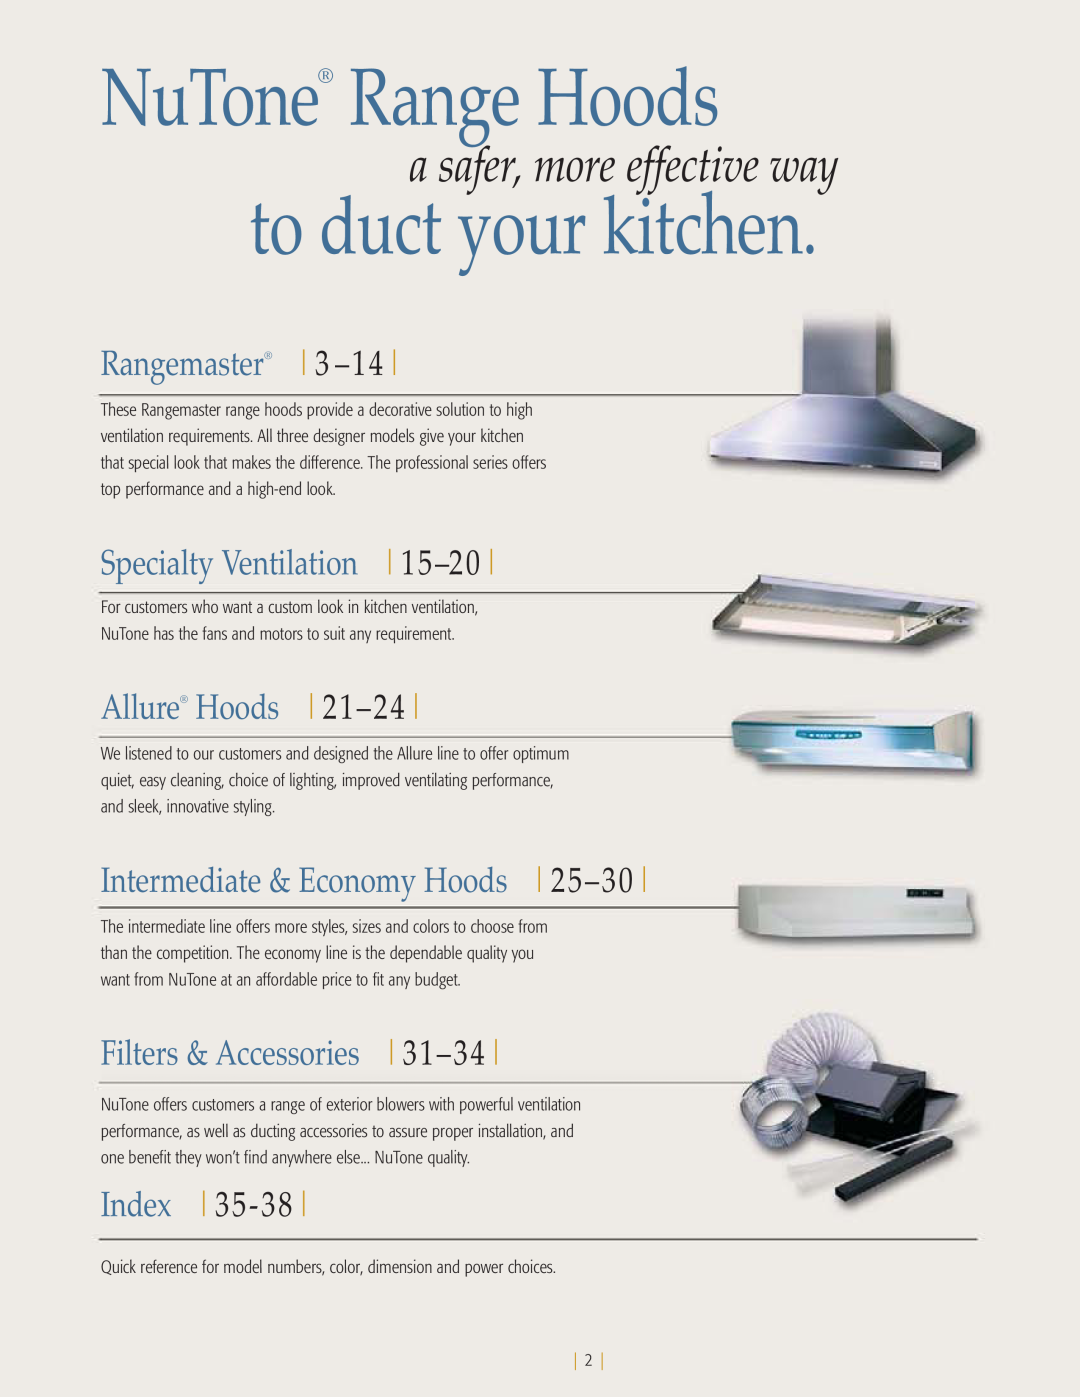 NuTone kitchen ventilation NuTone Range Hoods, to duct your kitchen, a safer, more effective way, Rangemaster 3, Index 